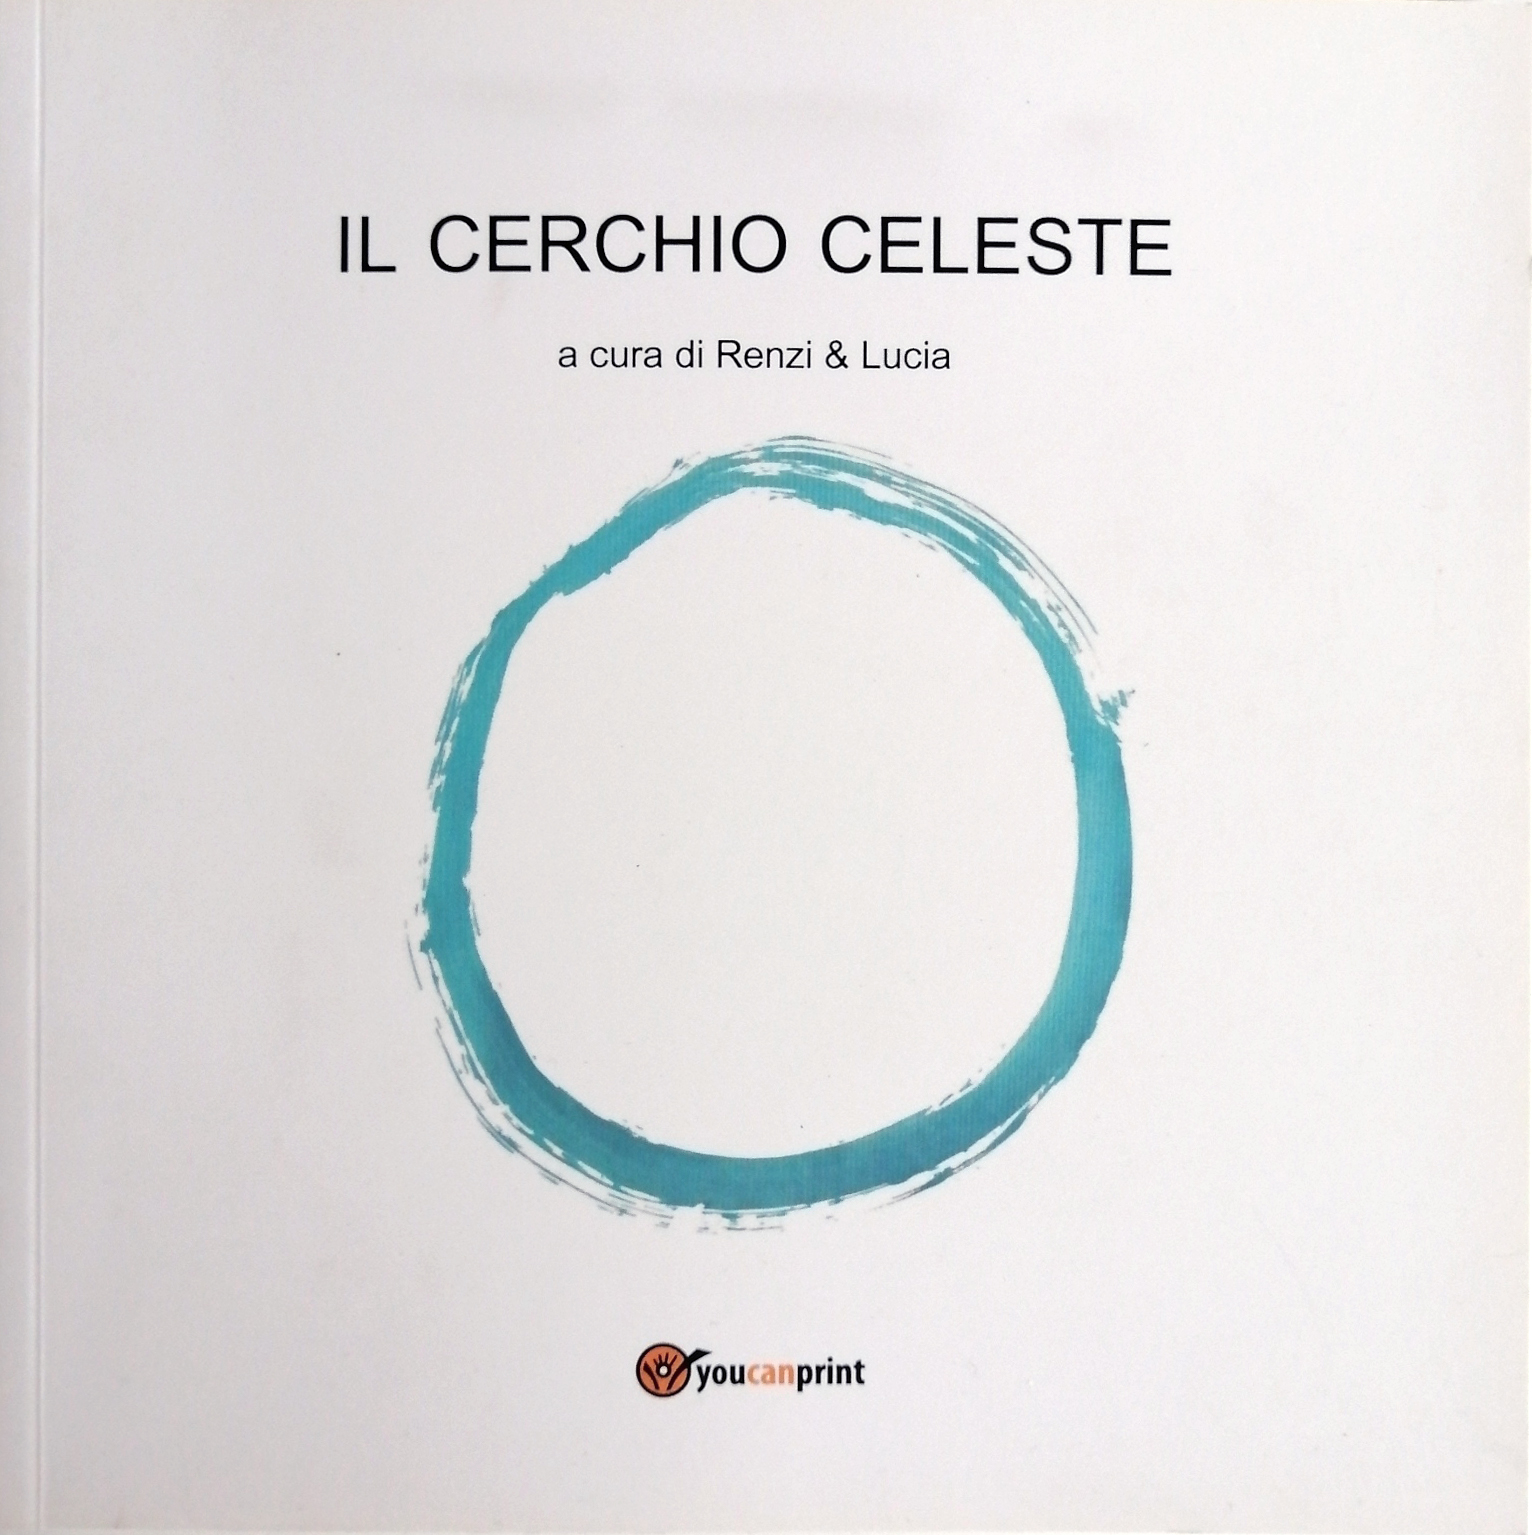 2013 Il Cerchio Celeste libro Youcanprint  - Bibliography/ Catalogues